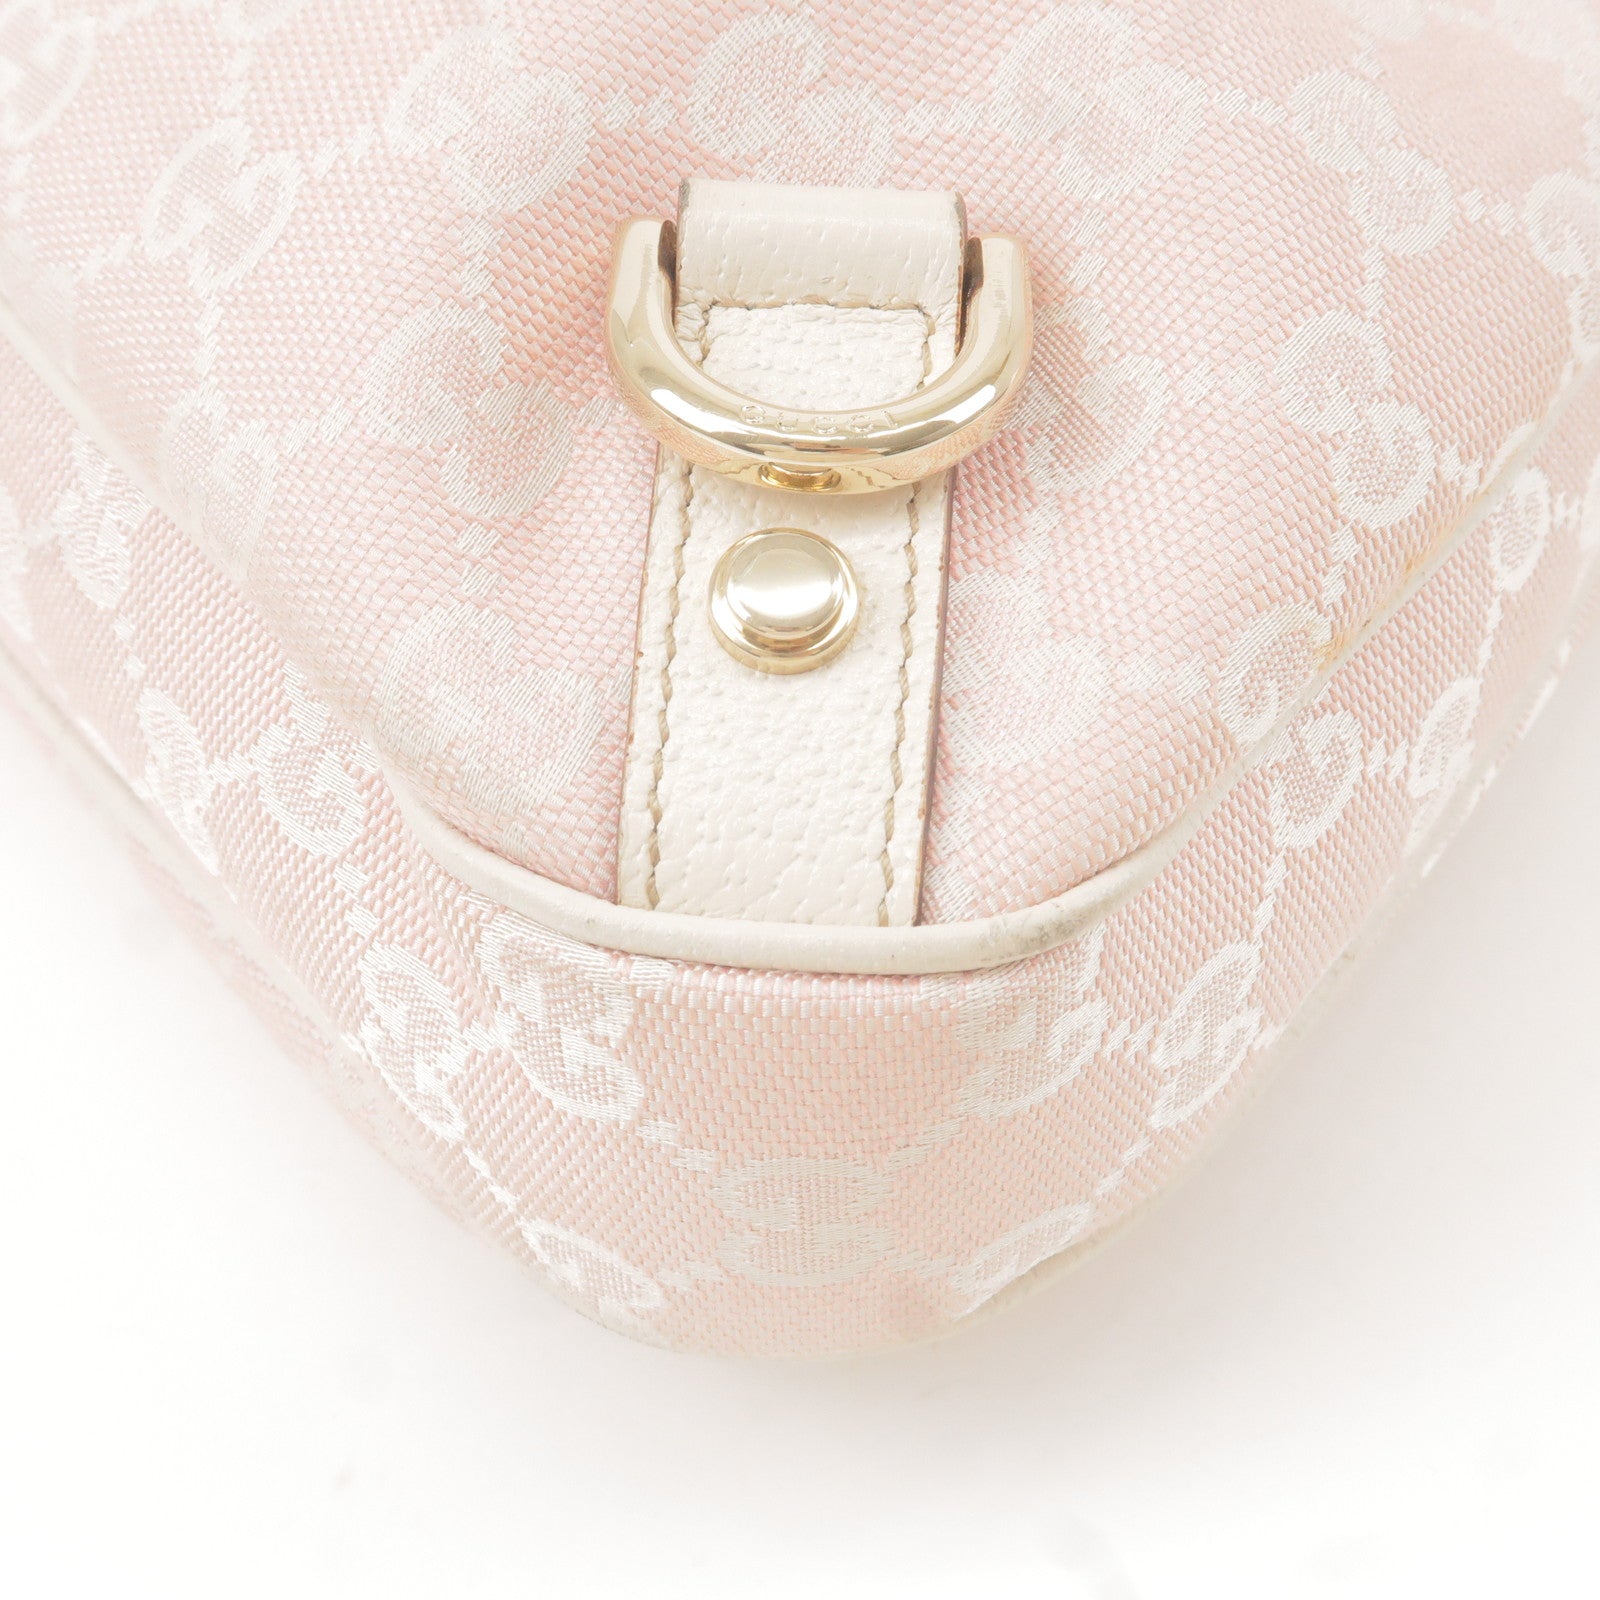 Gucci Abbey Handbag 343028